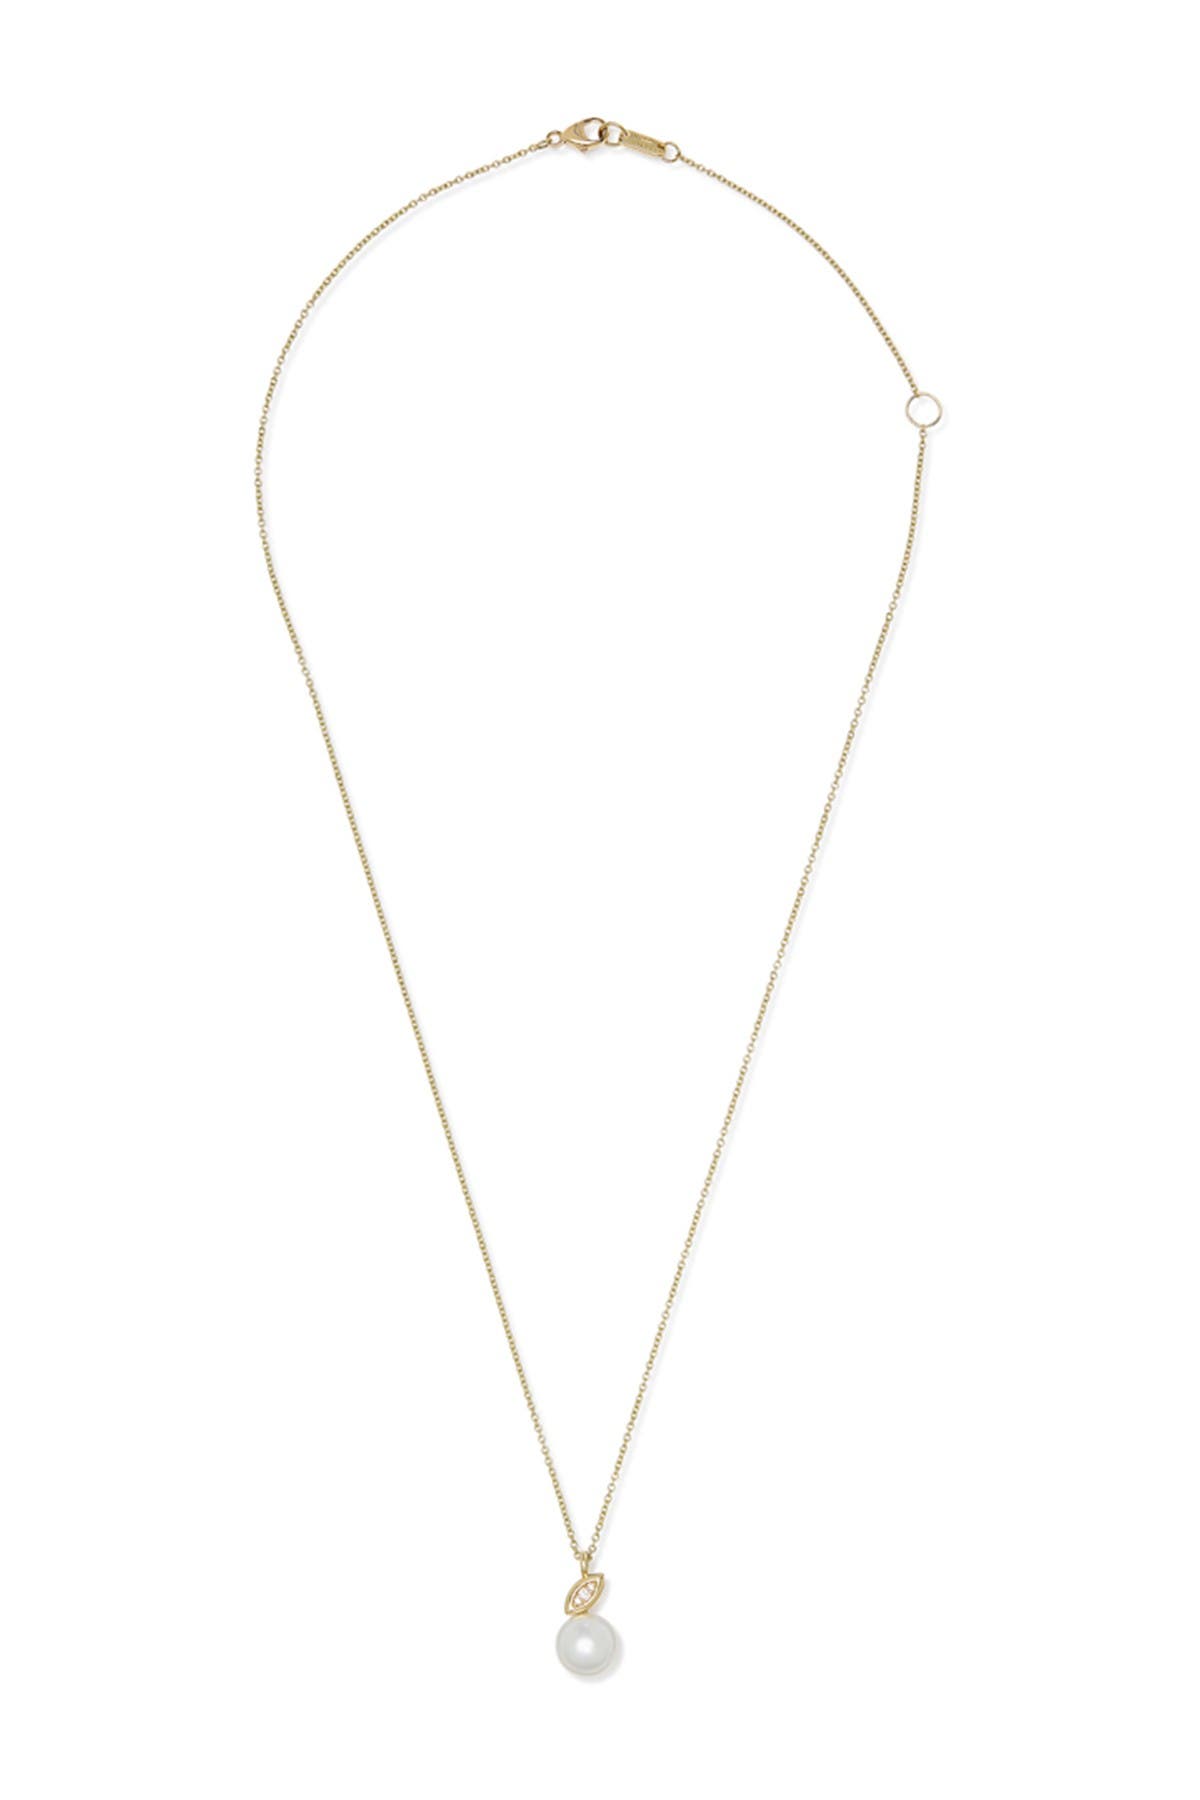 Ippolita Nova 18k Yellow Gold Pave Diamond & Freshwater Pearl Pendant Necklace